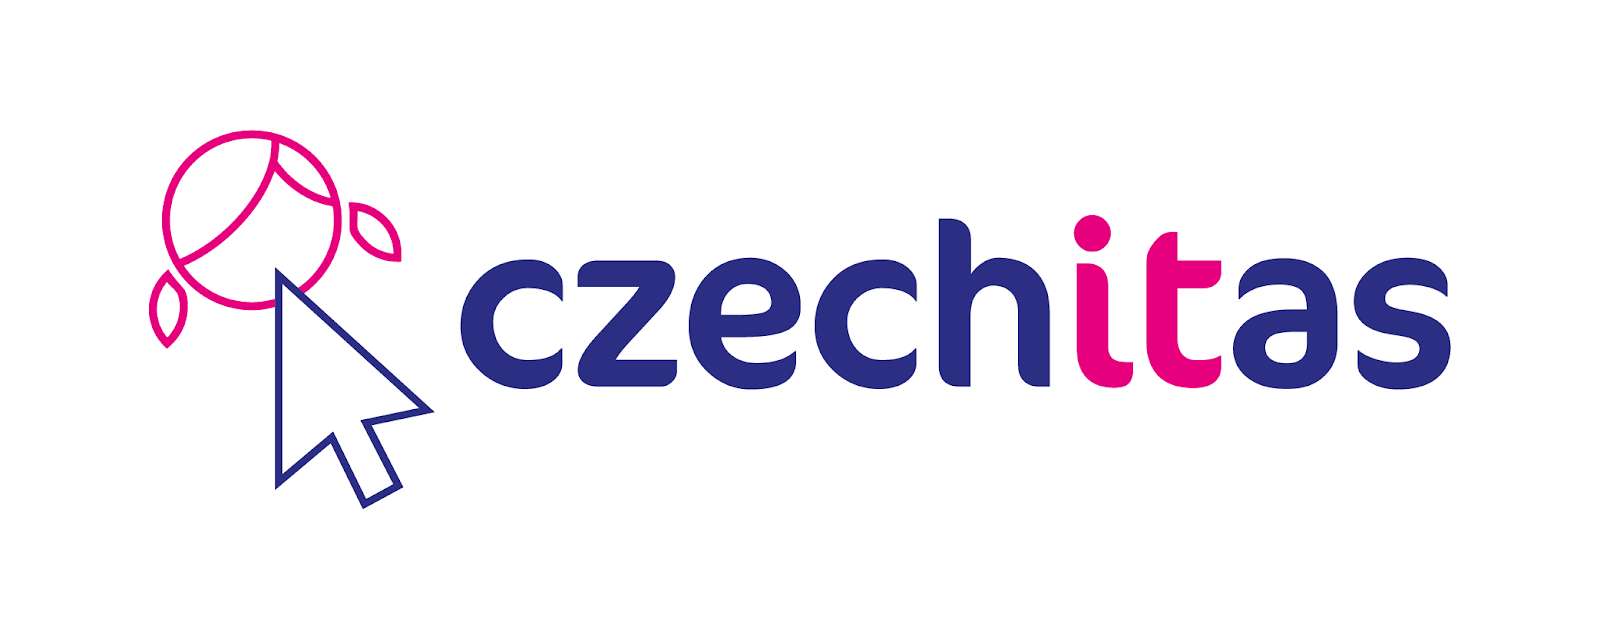 Czechitas logo